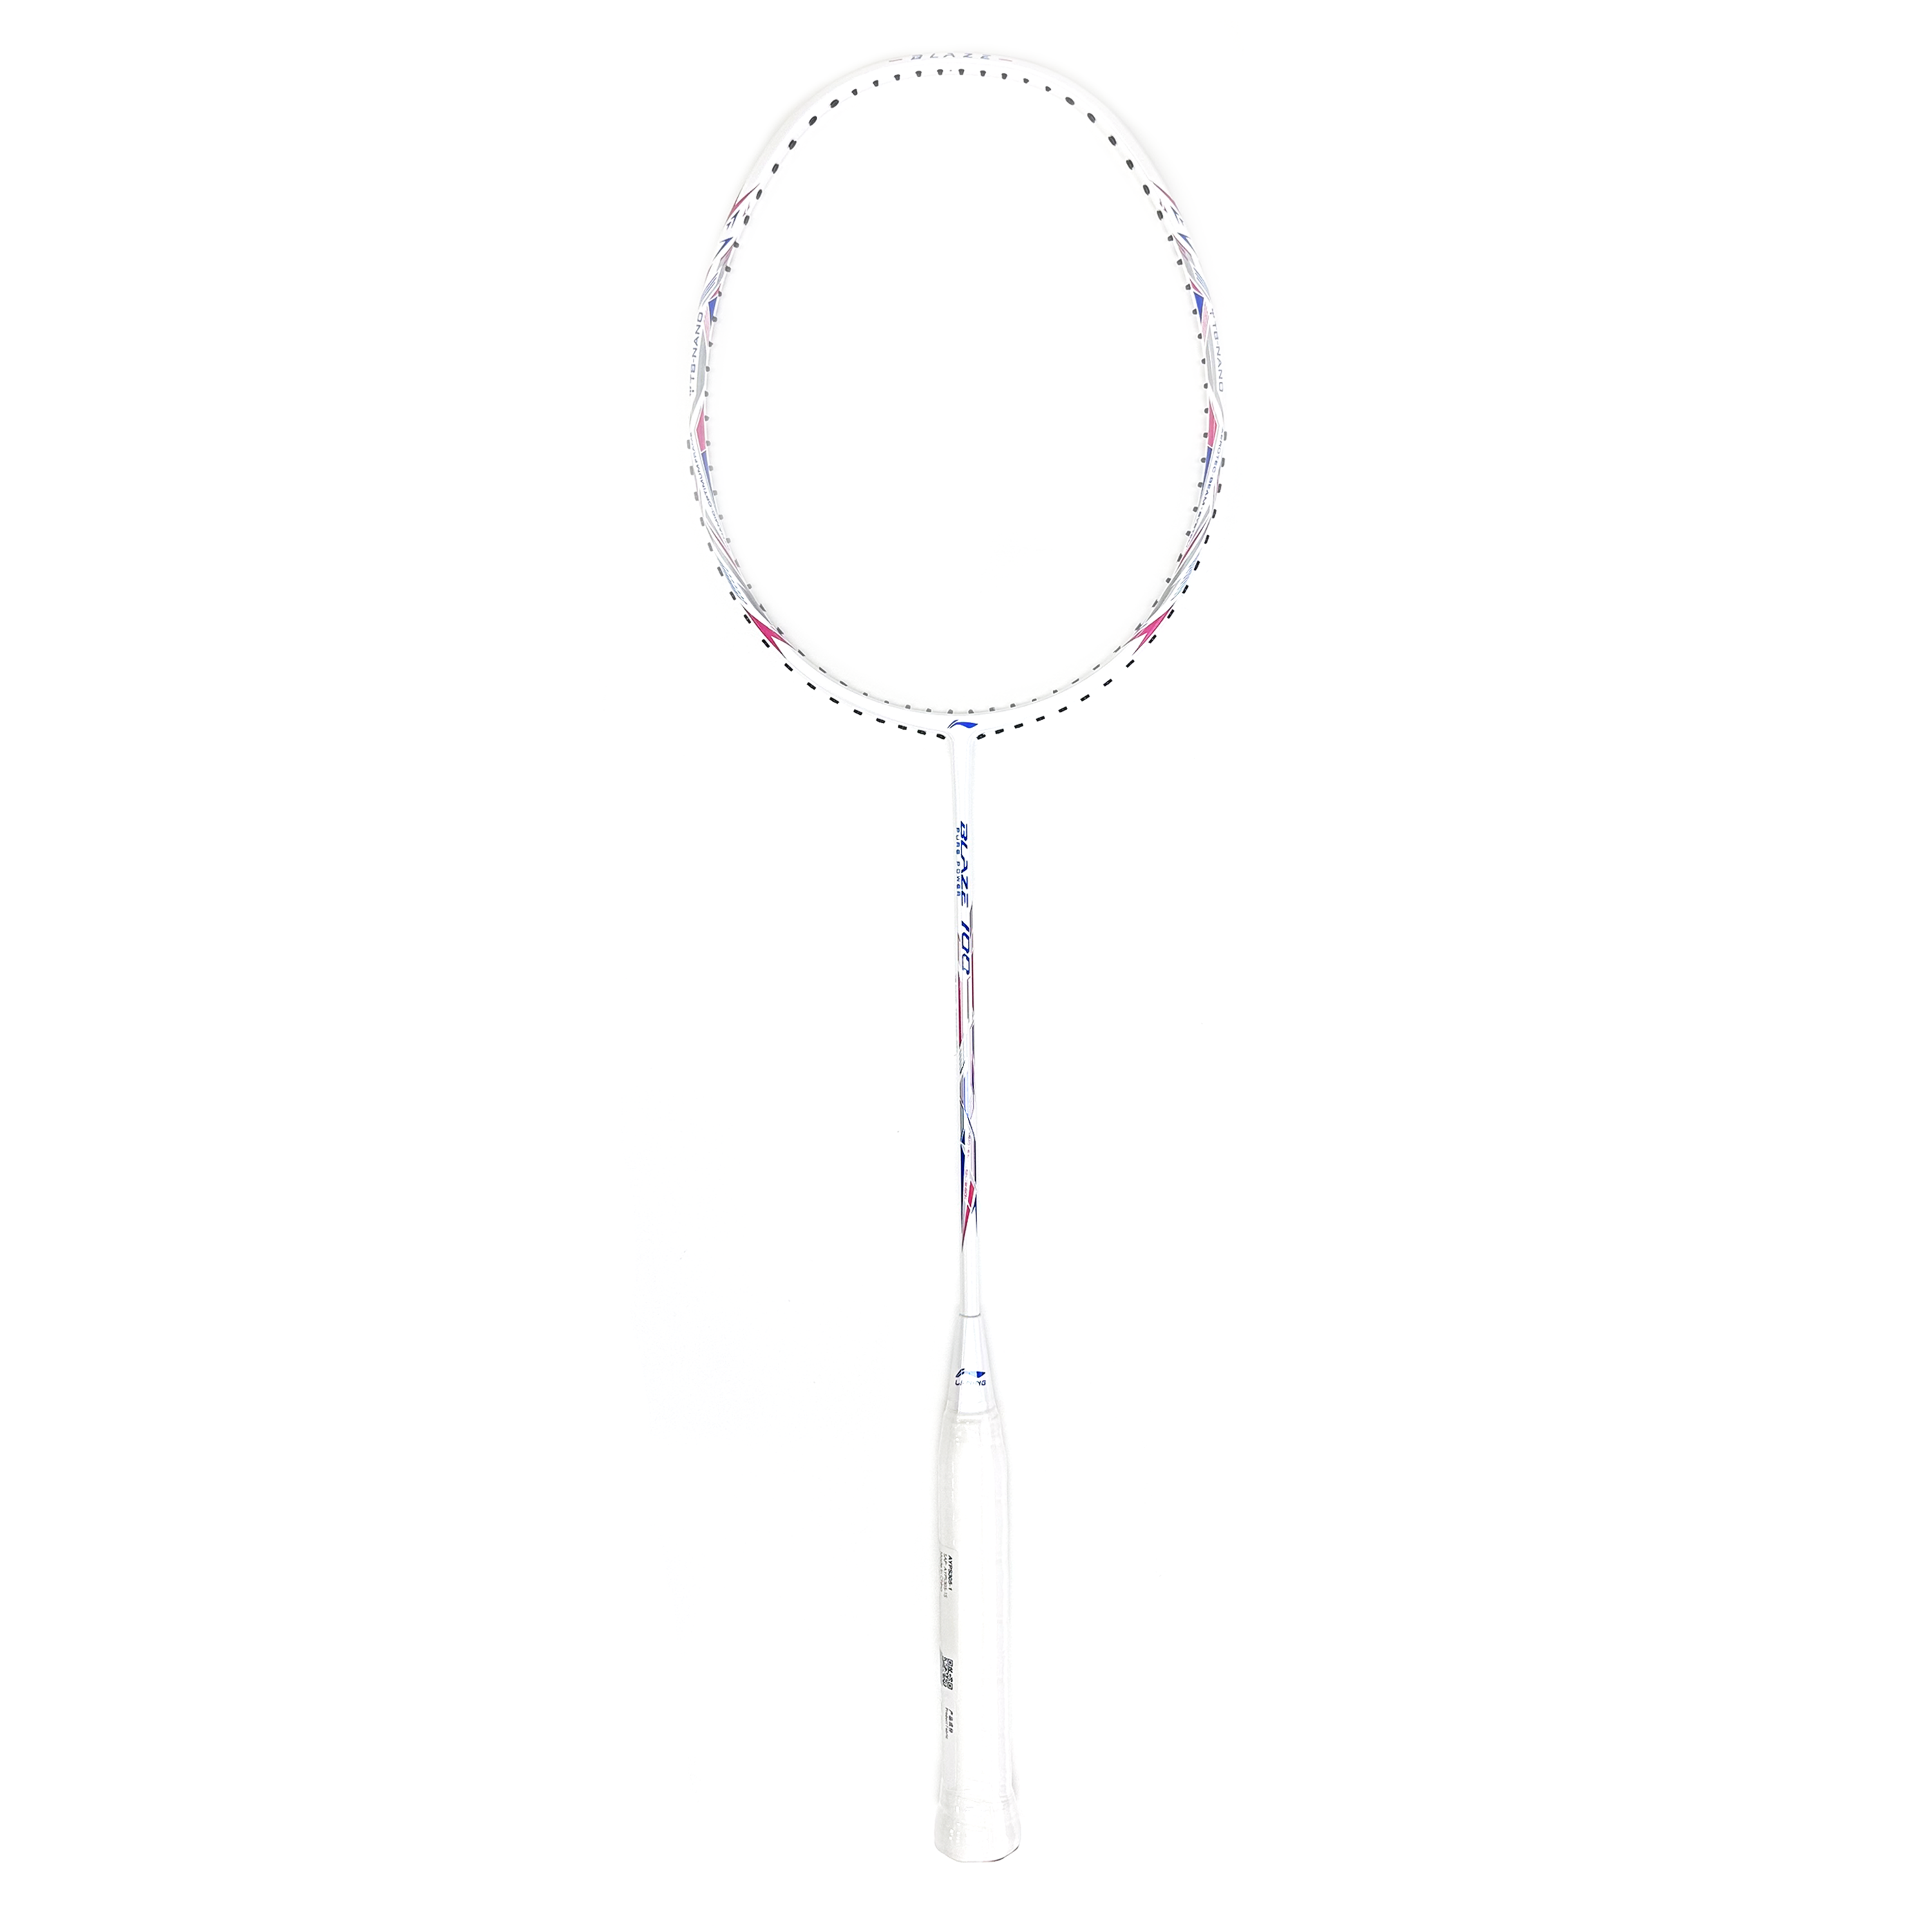 Li-Ning Blaze 100 Badminton Racquet White/ Blue 4U(84g)G6